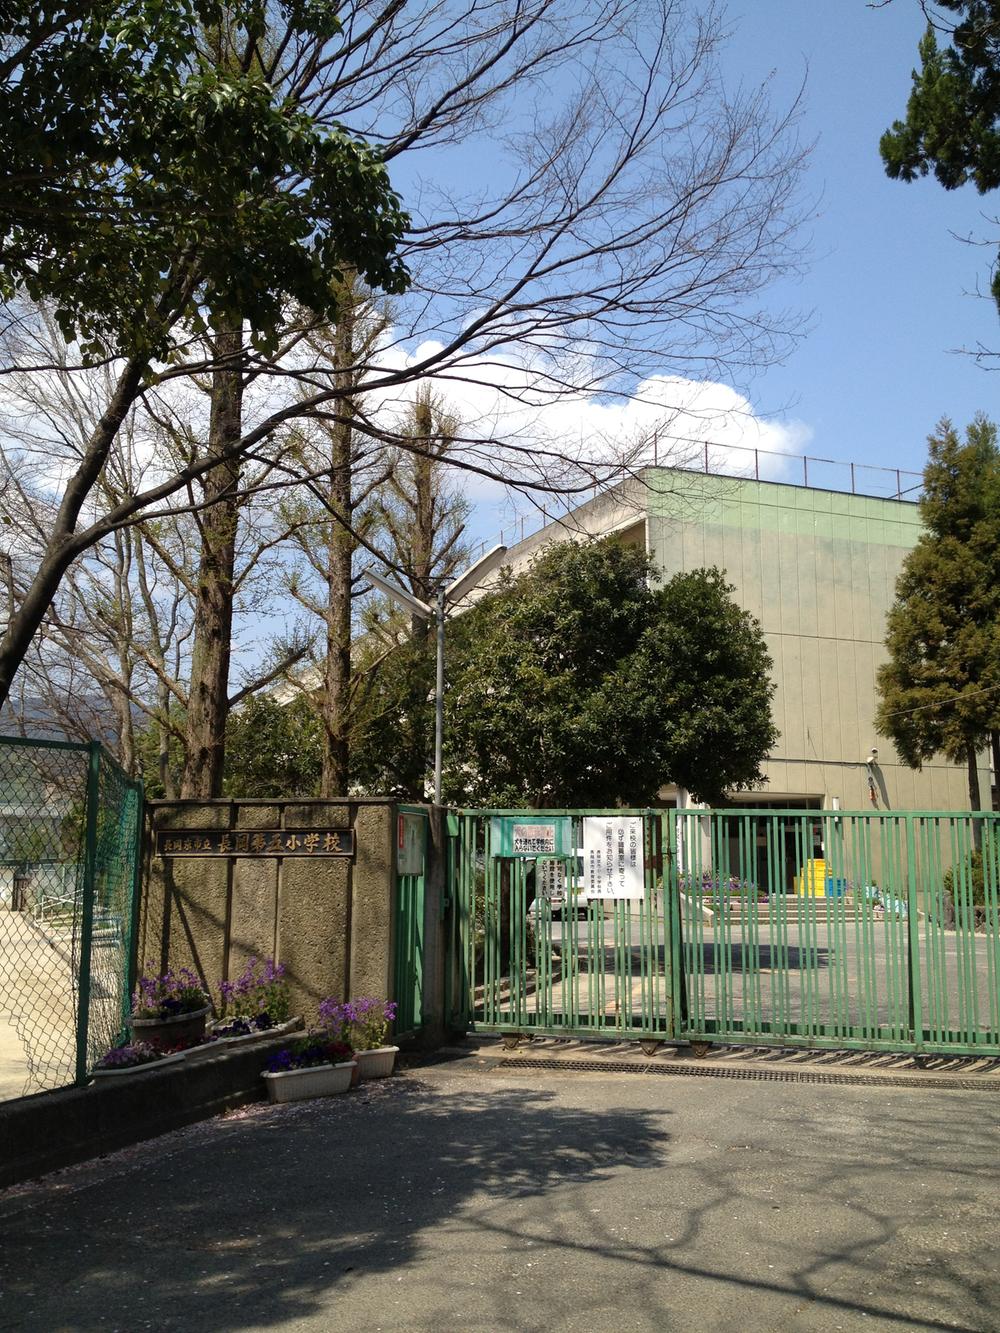 Primary school. Nagaokakyo 1198m to stand Nagaoka fifth elementary school